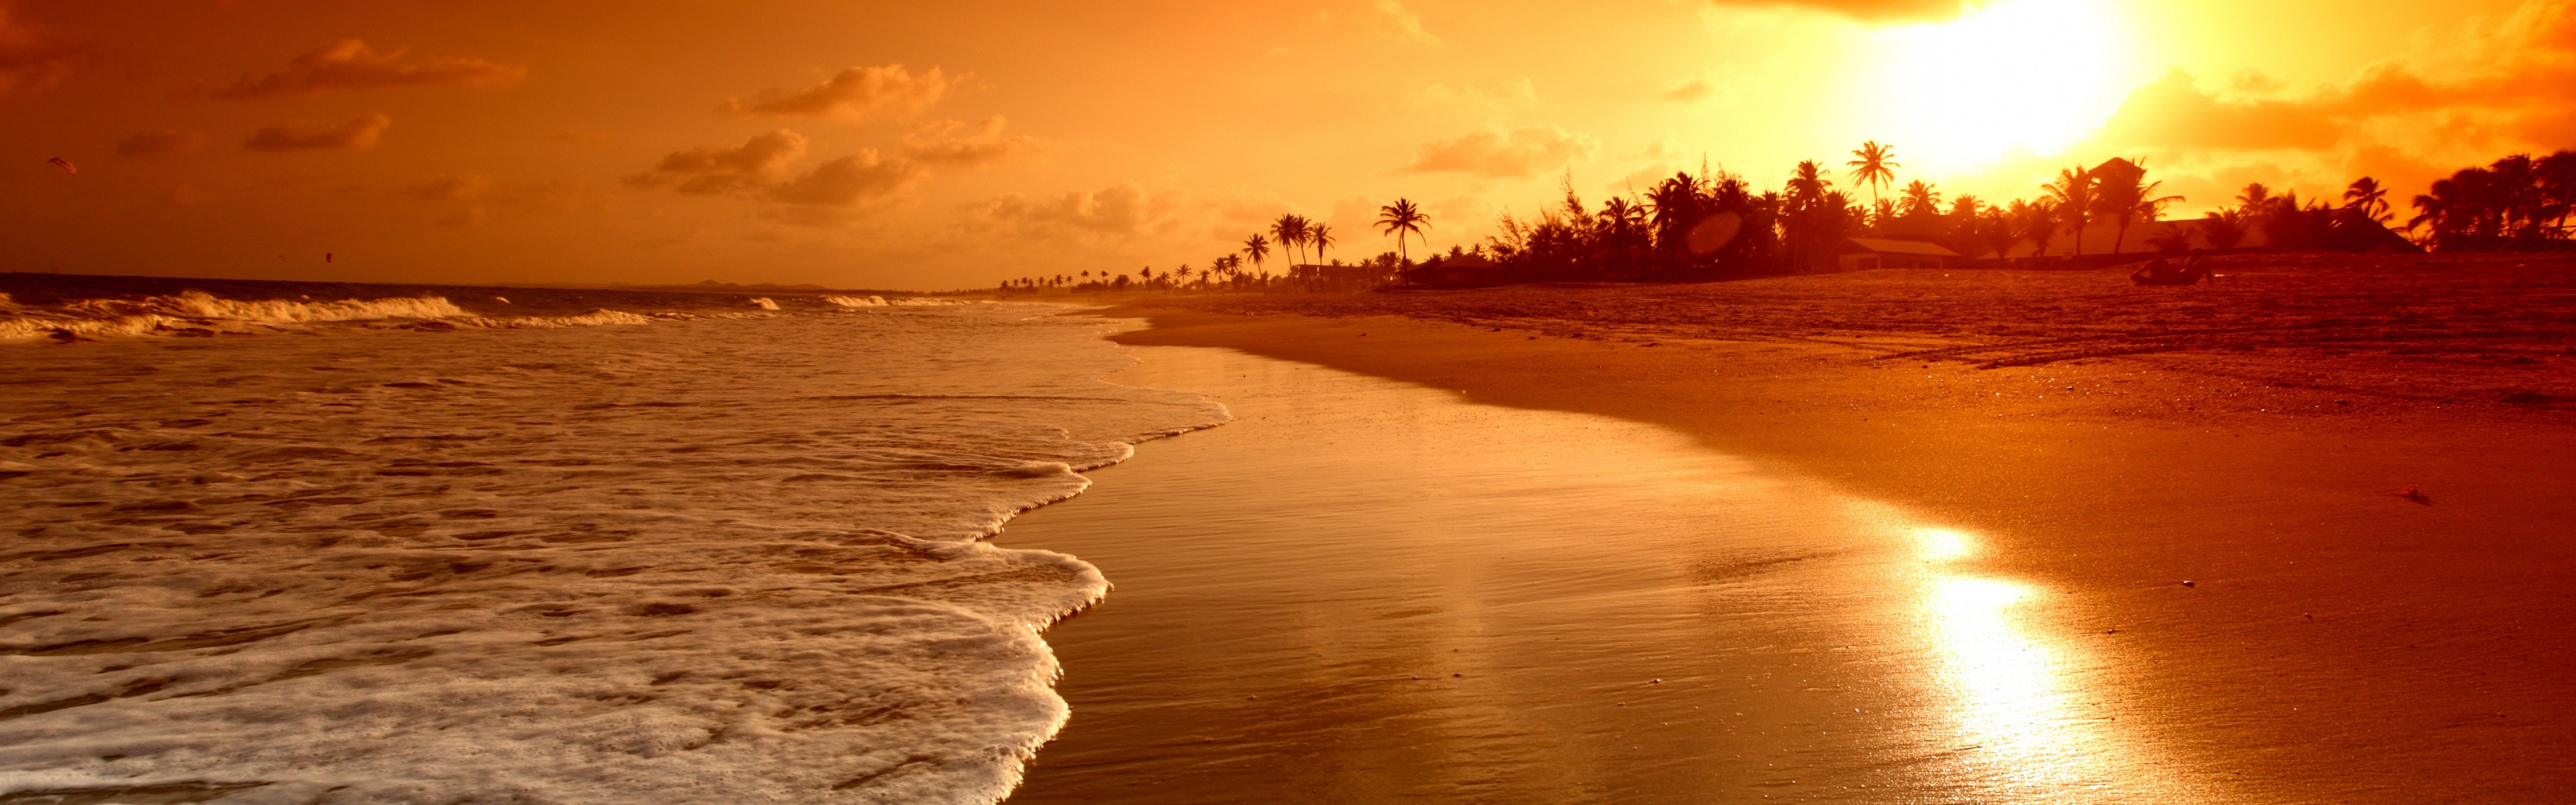 3840x1200 wallpaper.wiki-Beach-Sunrise-Panoramic-Image-PIC-WPD001351